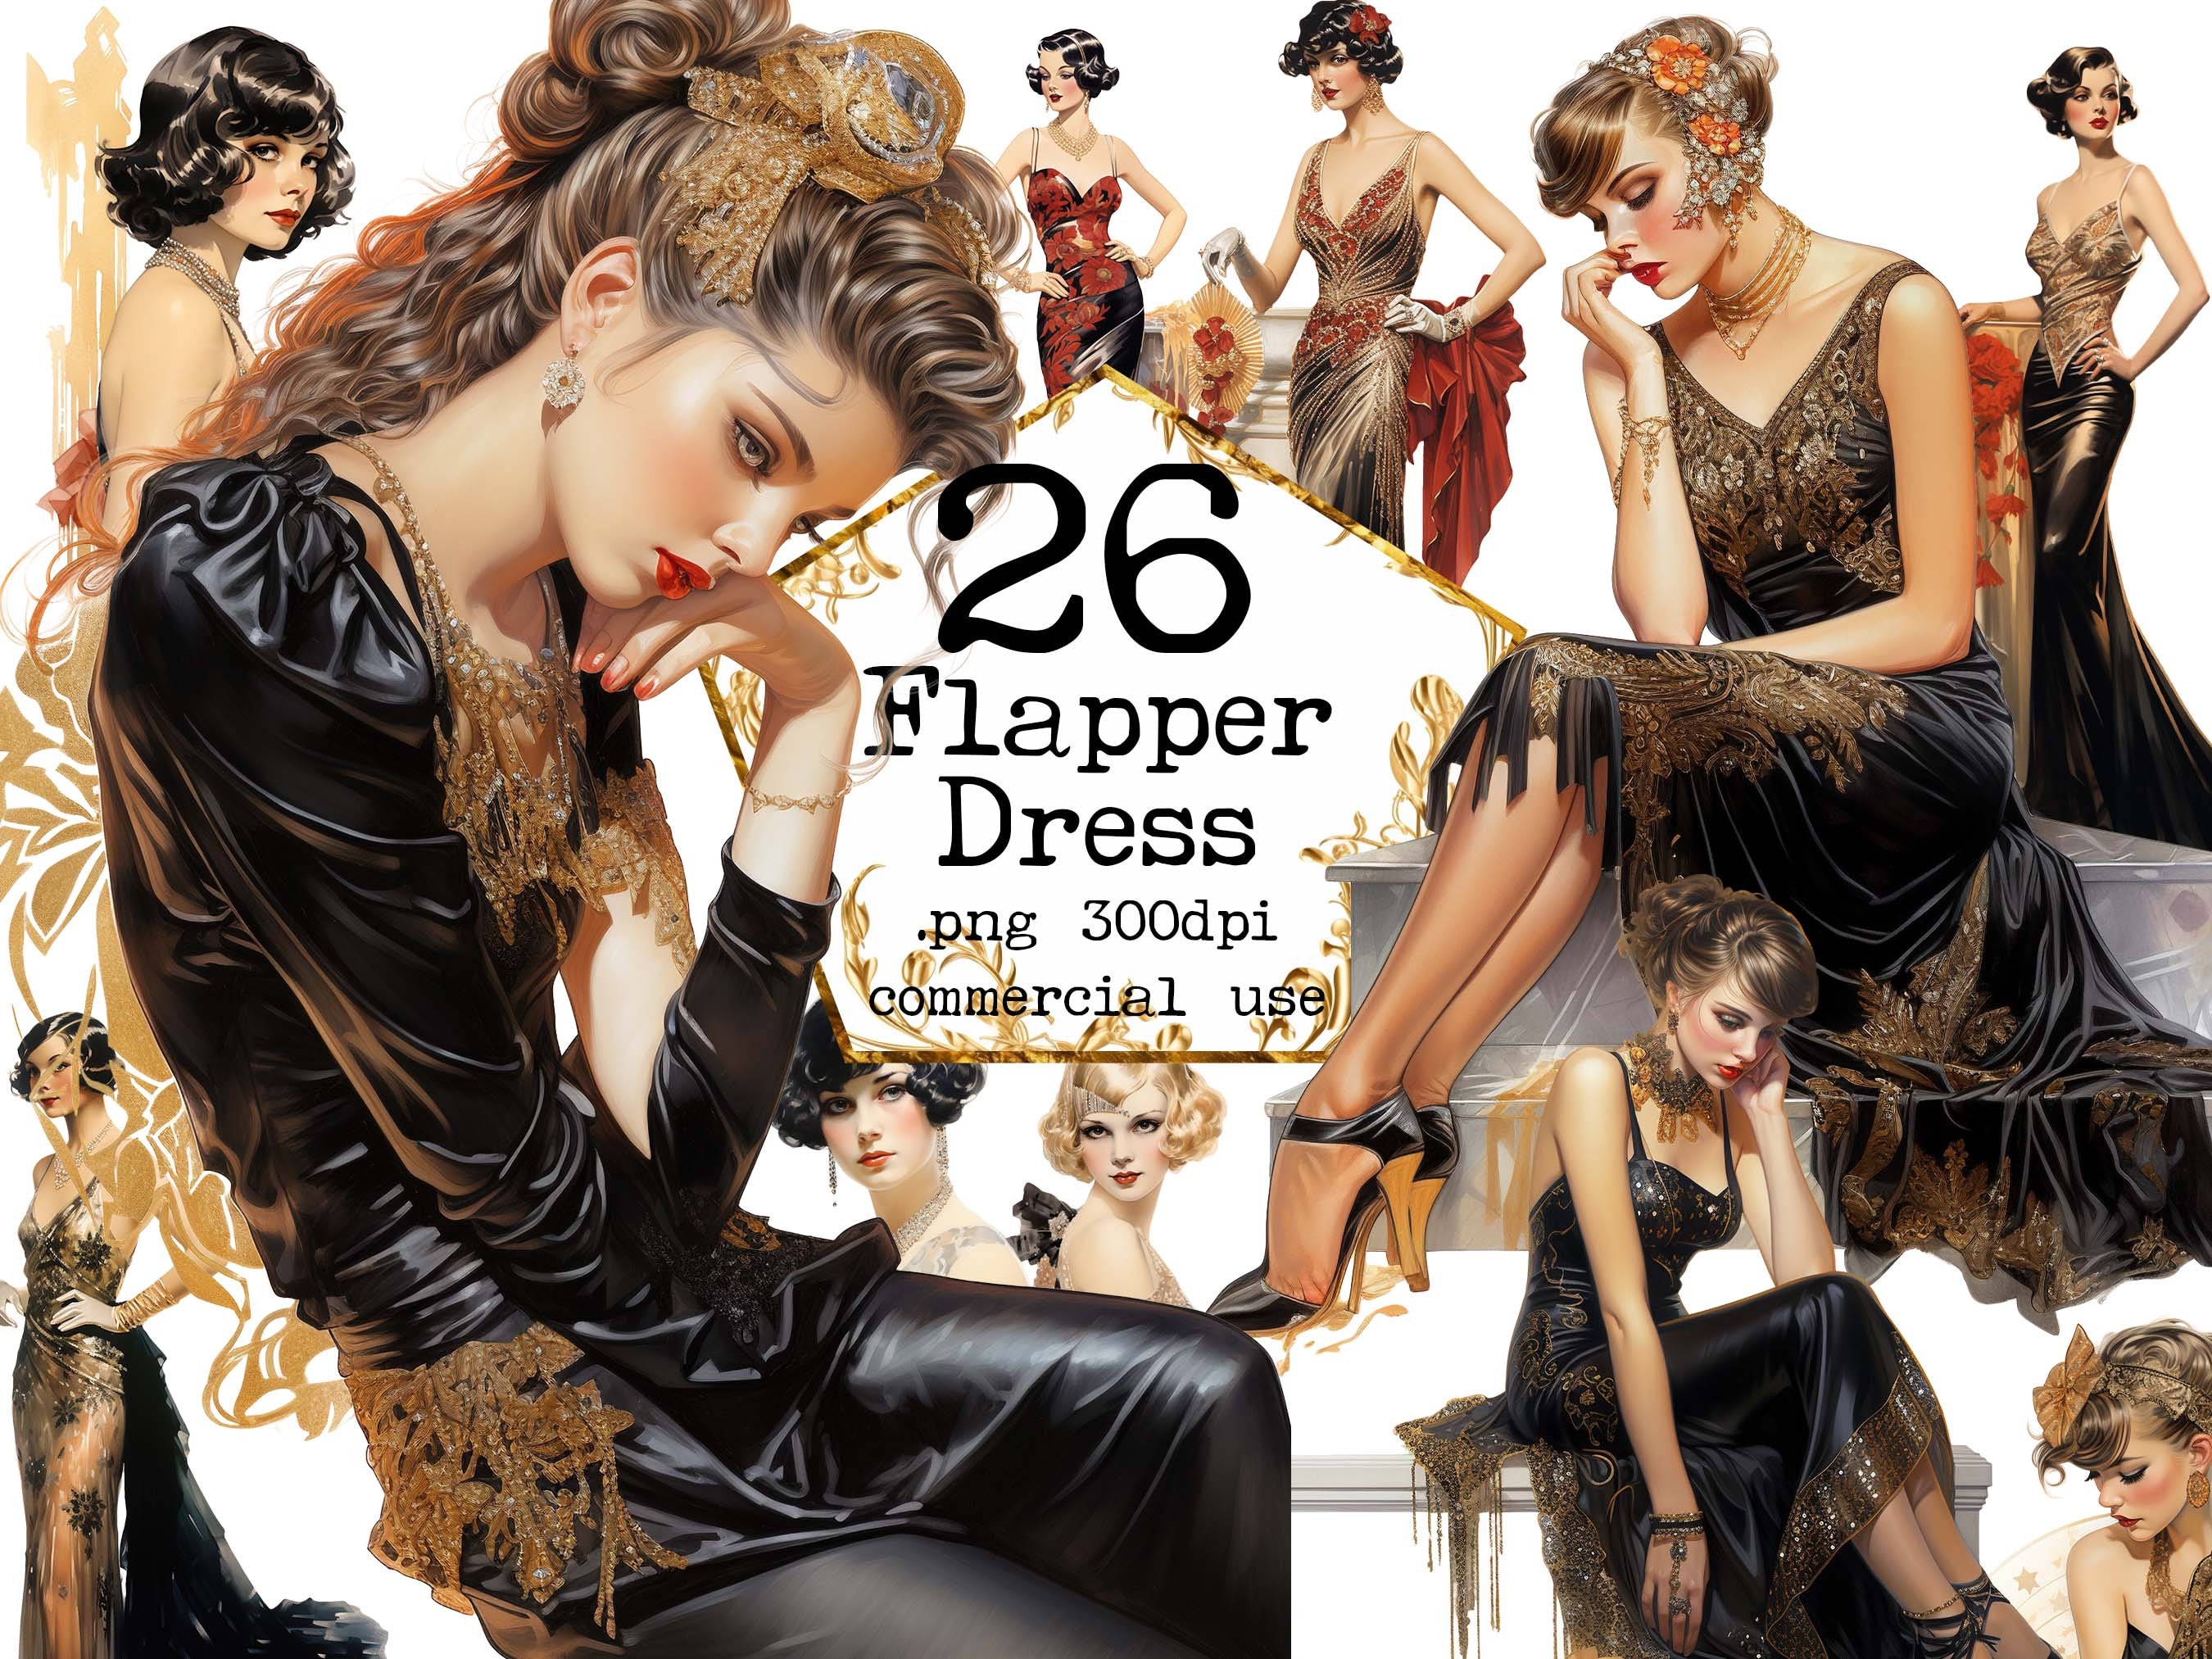 DRESS CLIPS, Oscar de la Renta Fall 2010, #ArtDeco #dressclips  (#doubleClipBrooch). #diamondclip #Artdecojewelry #…